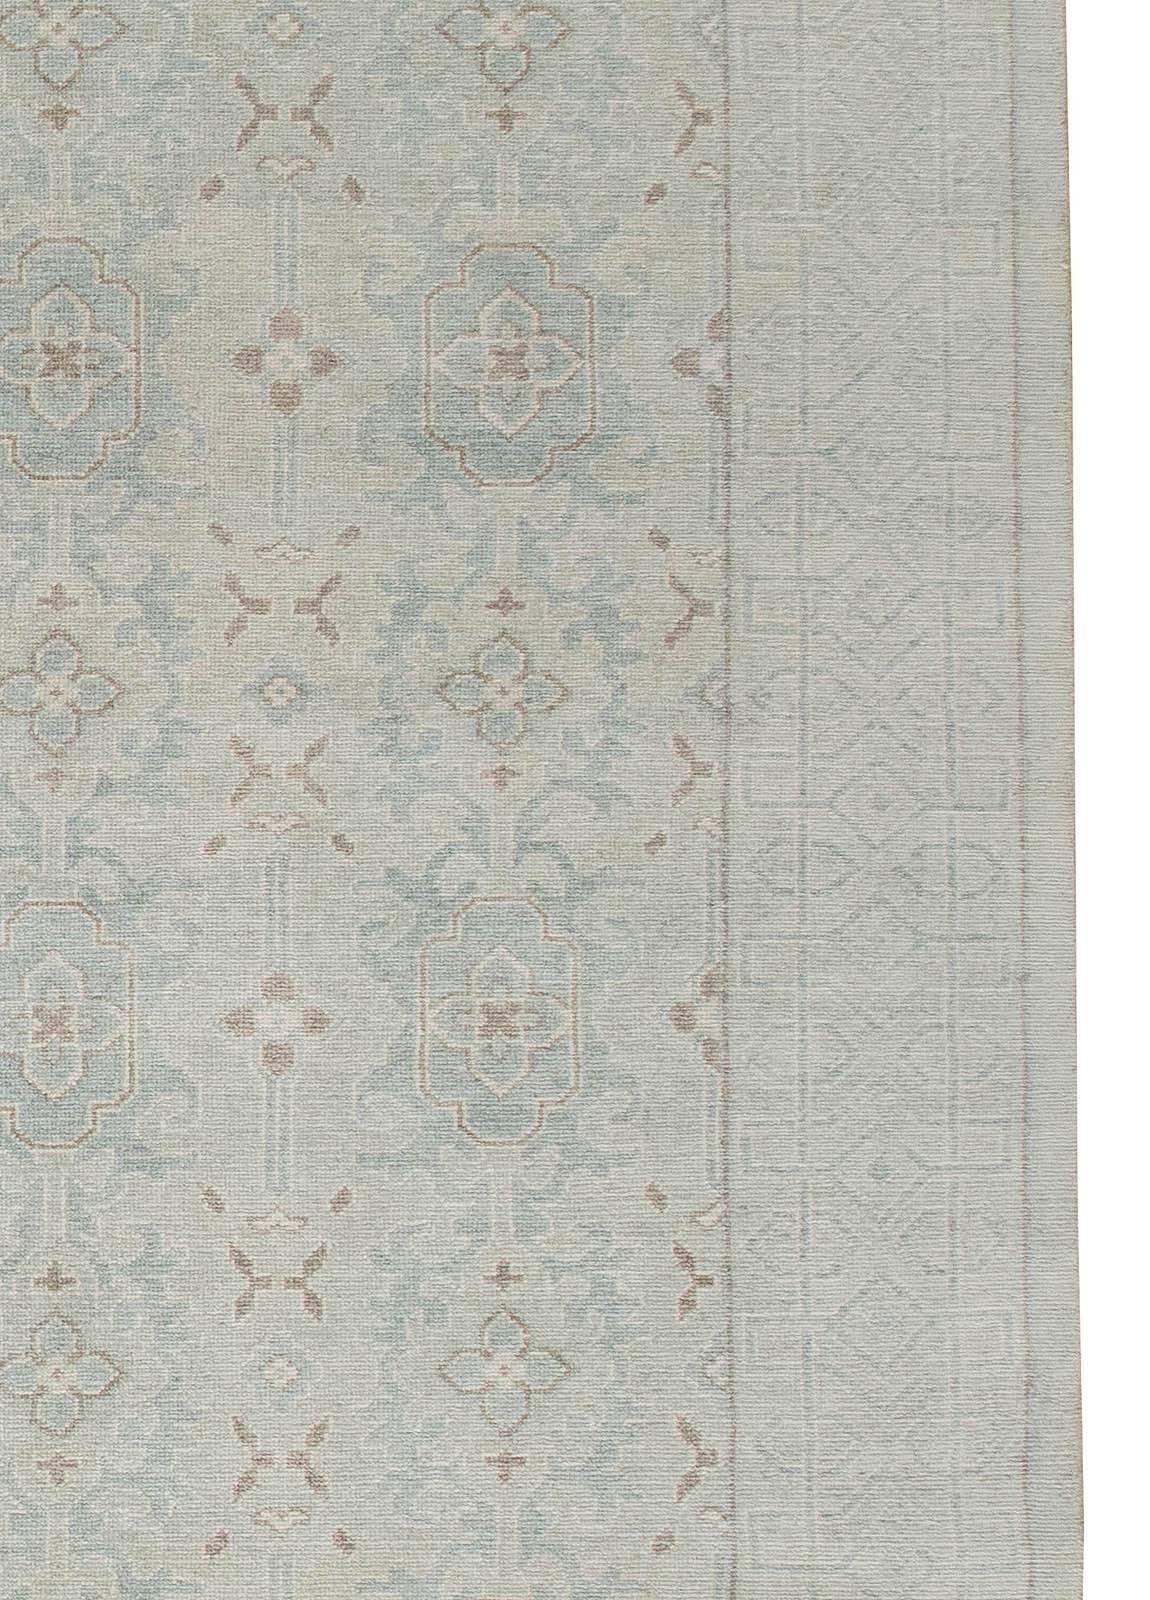 Contemporary Traditional Oriental Inspired Samarkand Botanic Rug by Doris Leslie Blau For Sale